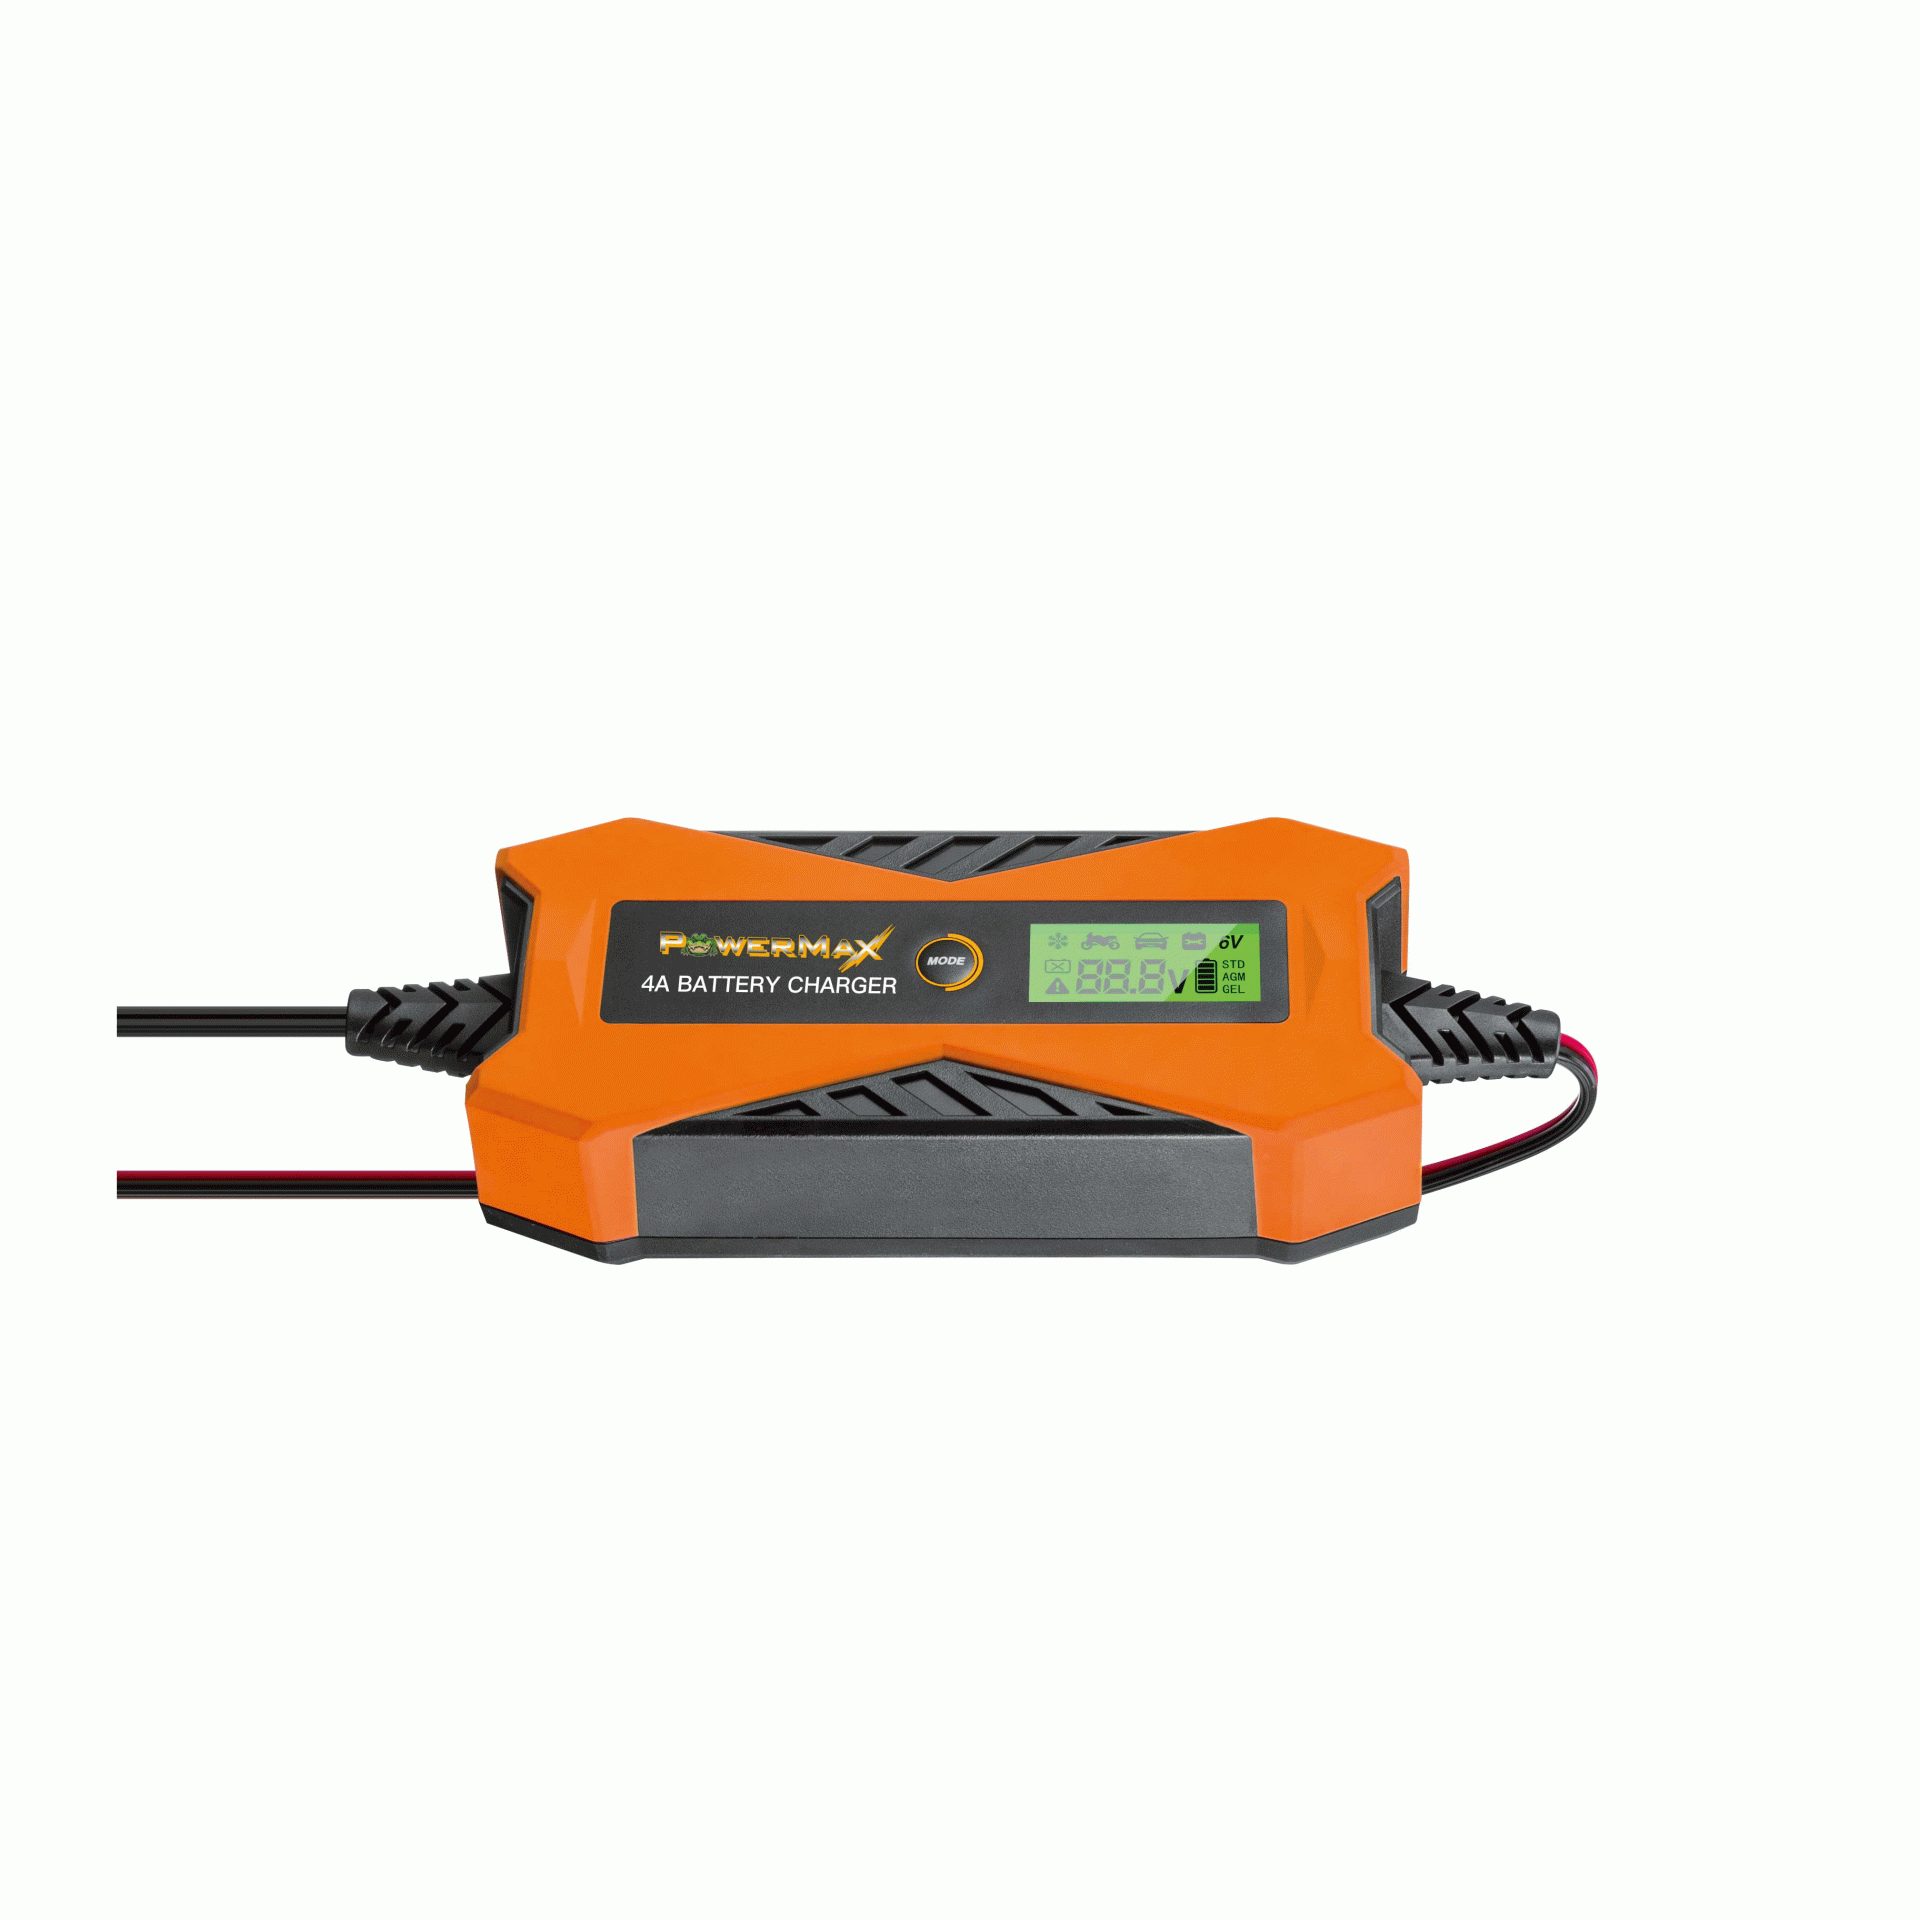 POWERMAX CONVERTERS PMMC-04 Smart Battery Charger Amp